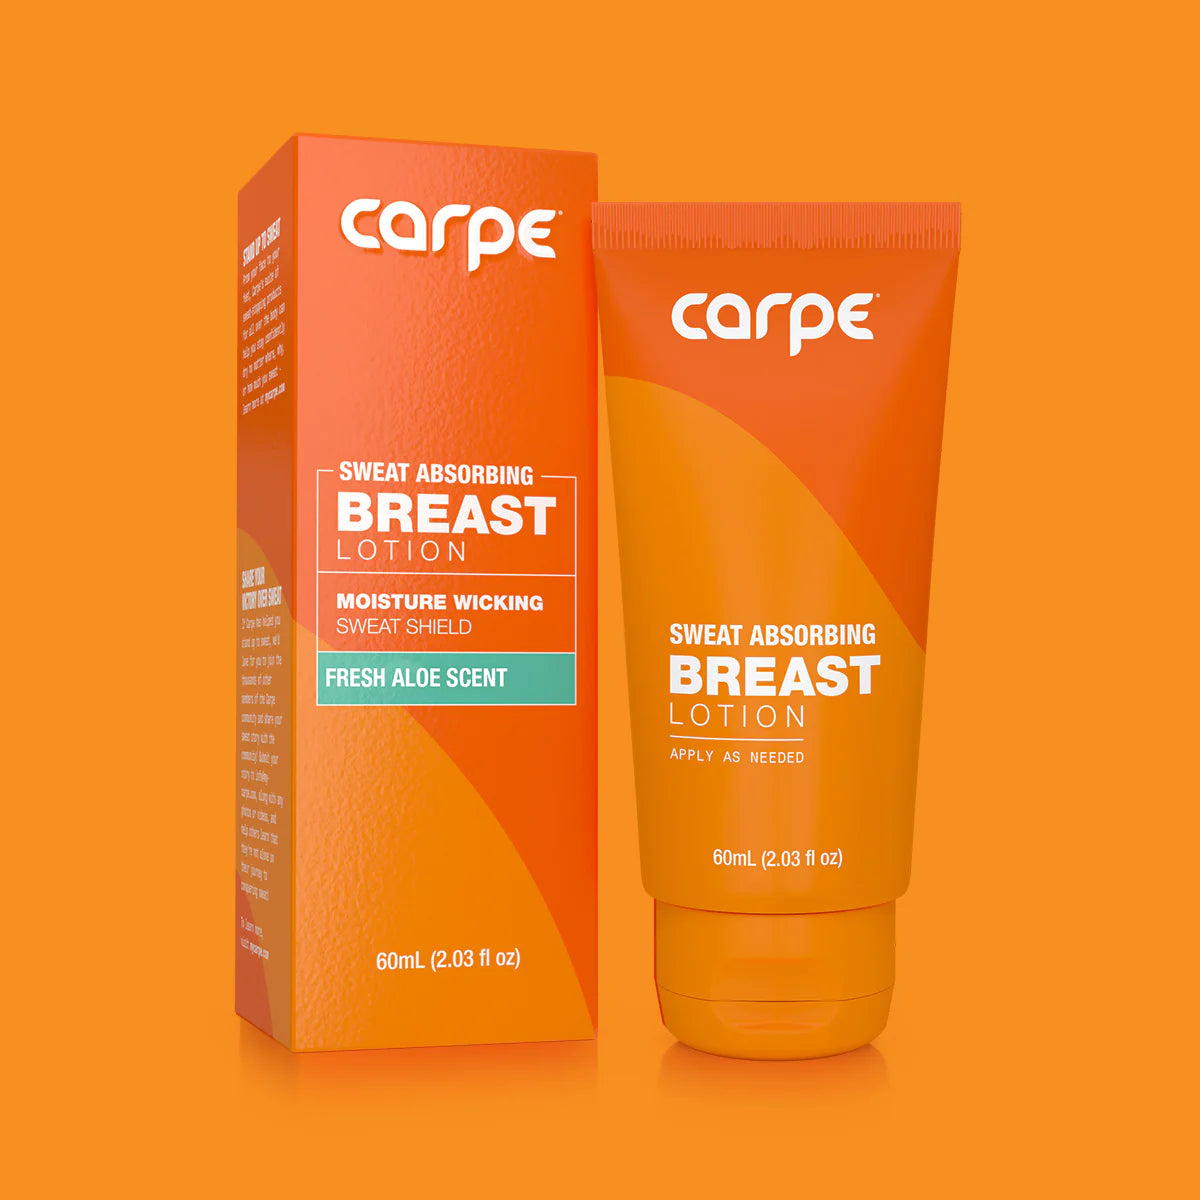  Carpe Sweat Absorbing Breast - Helps Keep Your